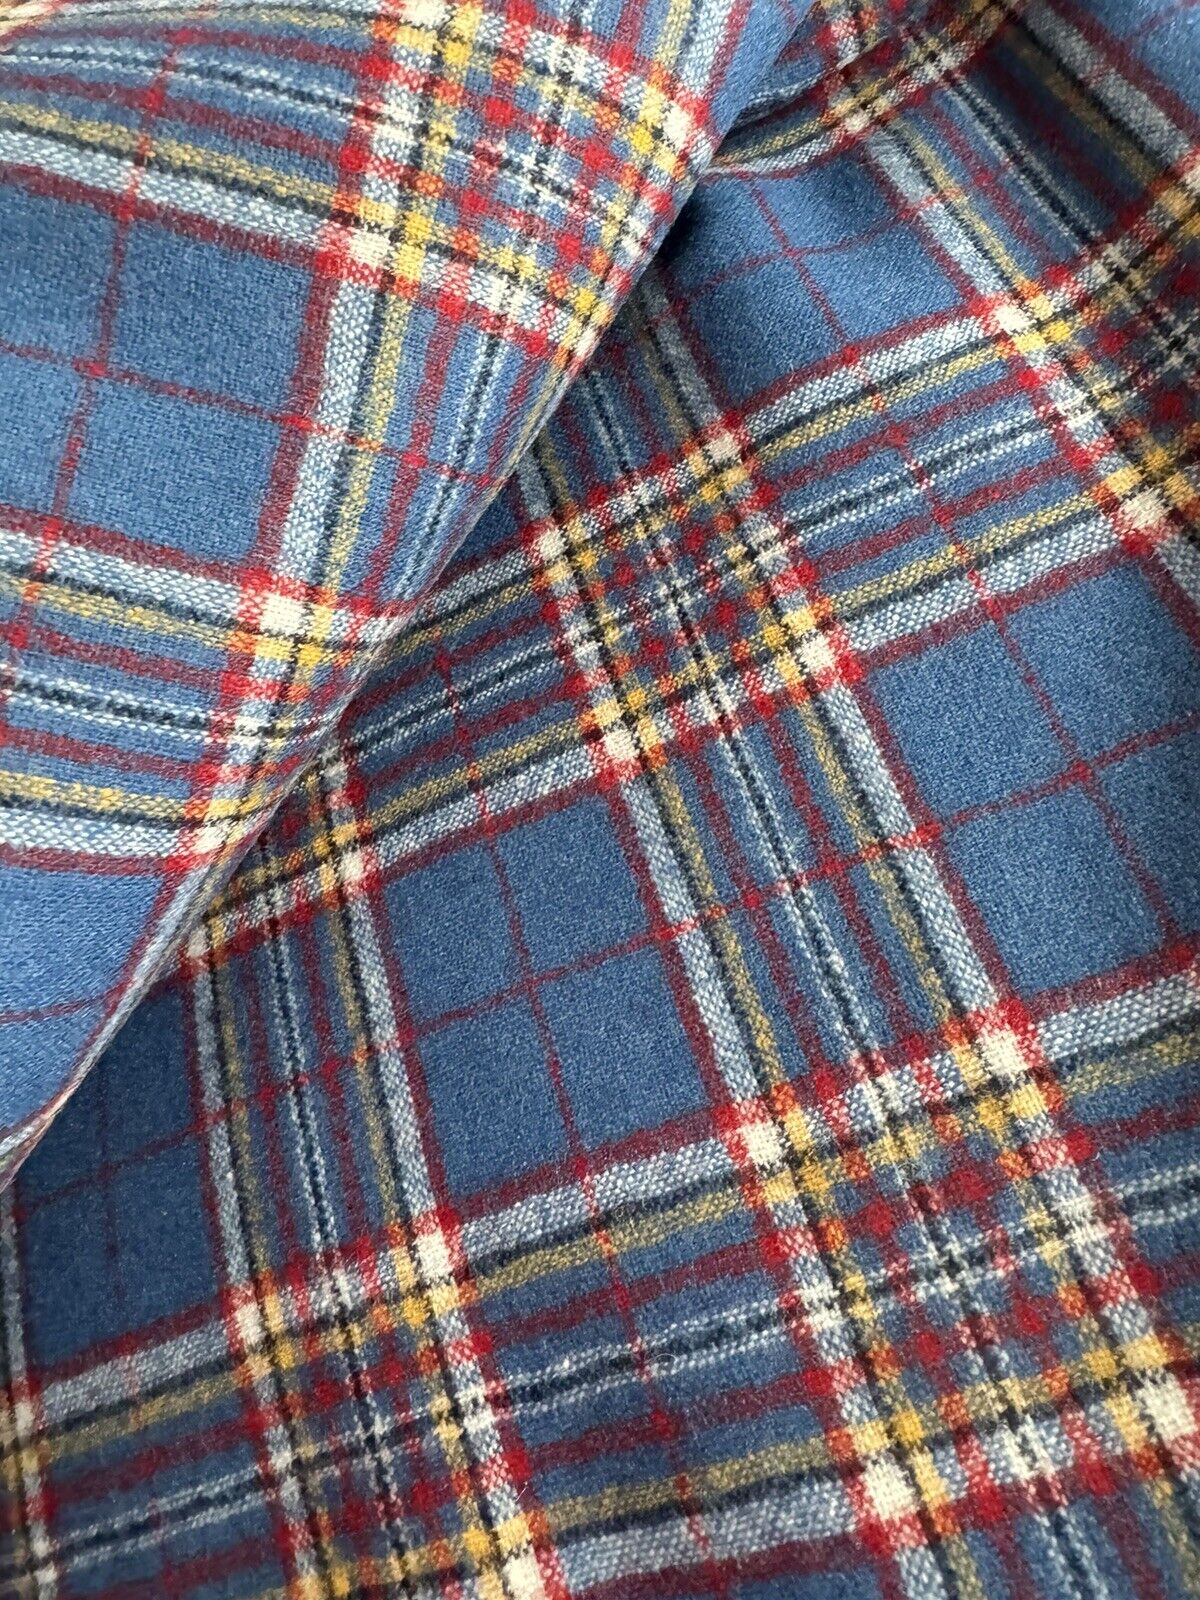 Virgin Wool Pendleton Tartan / Plaid Fabric - Red Blue Beige - 2.2 Yards (80”)